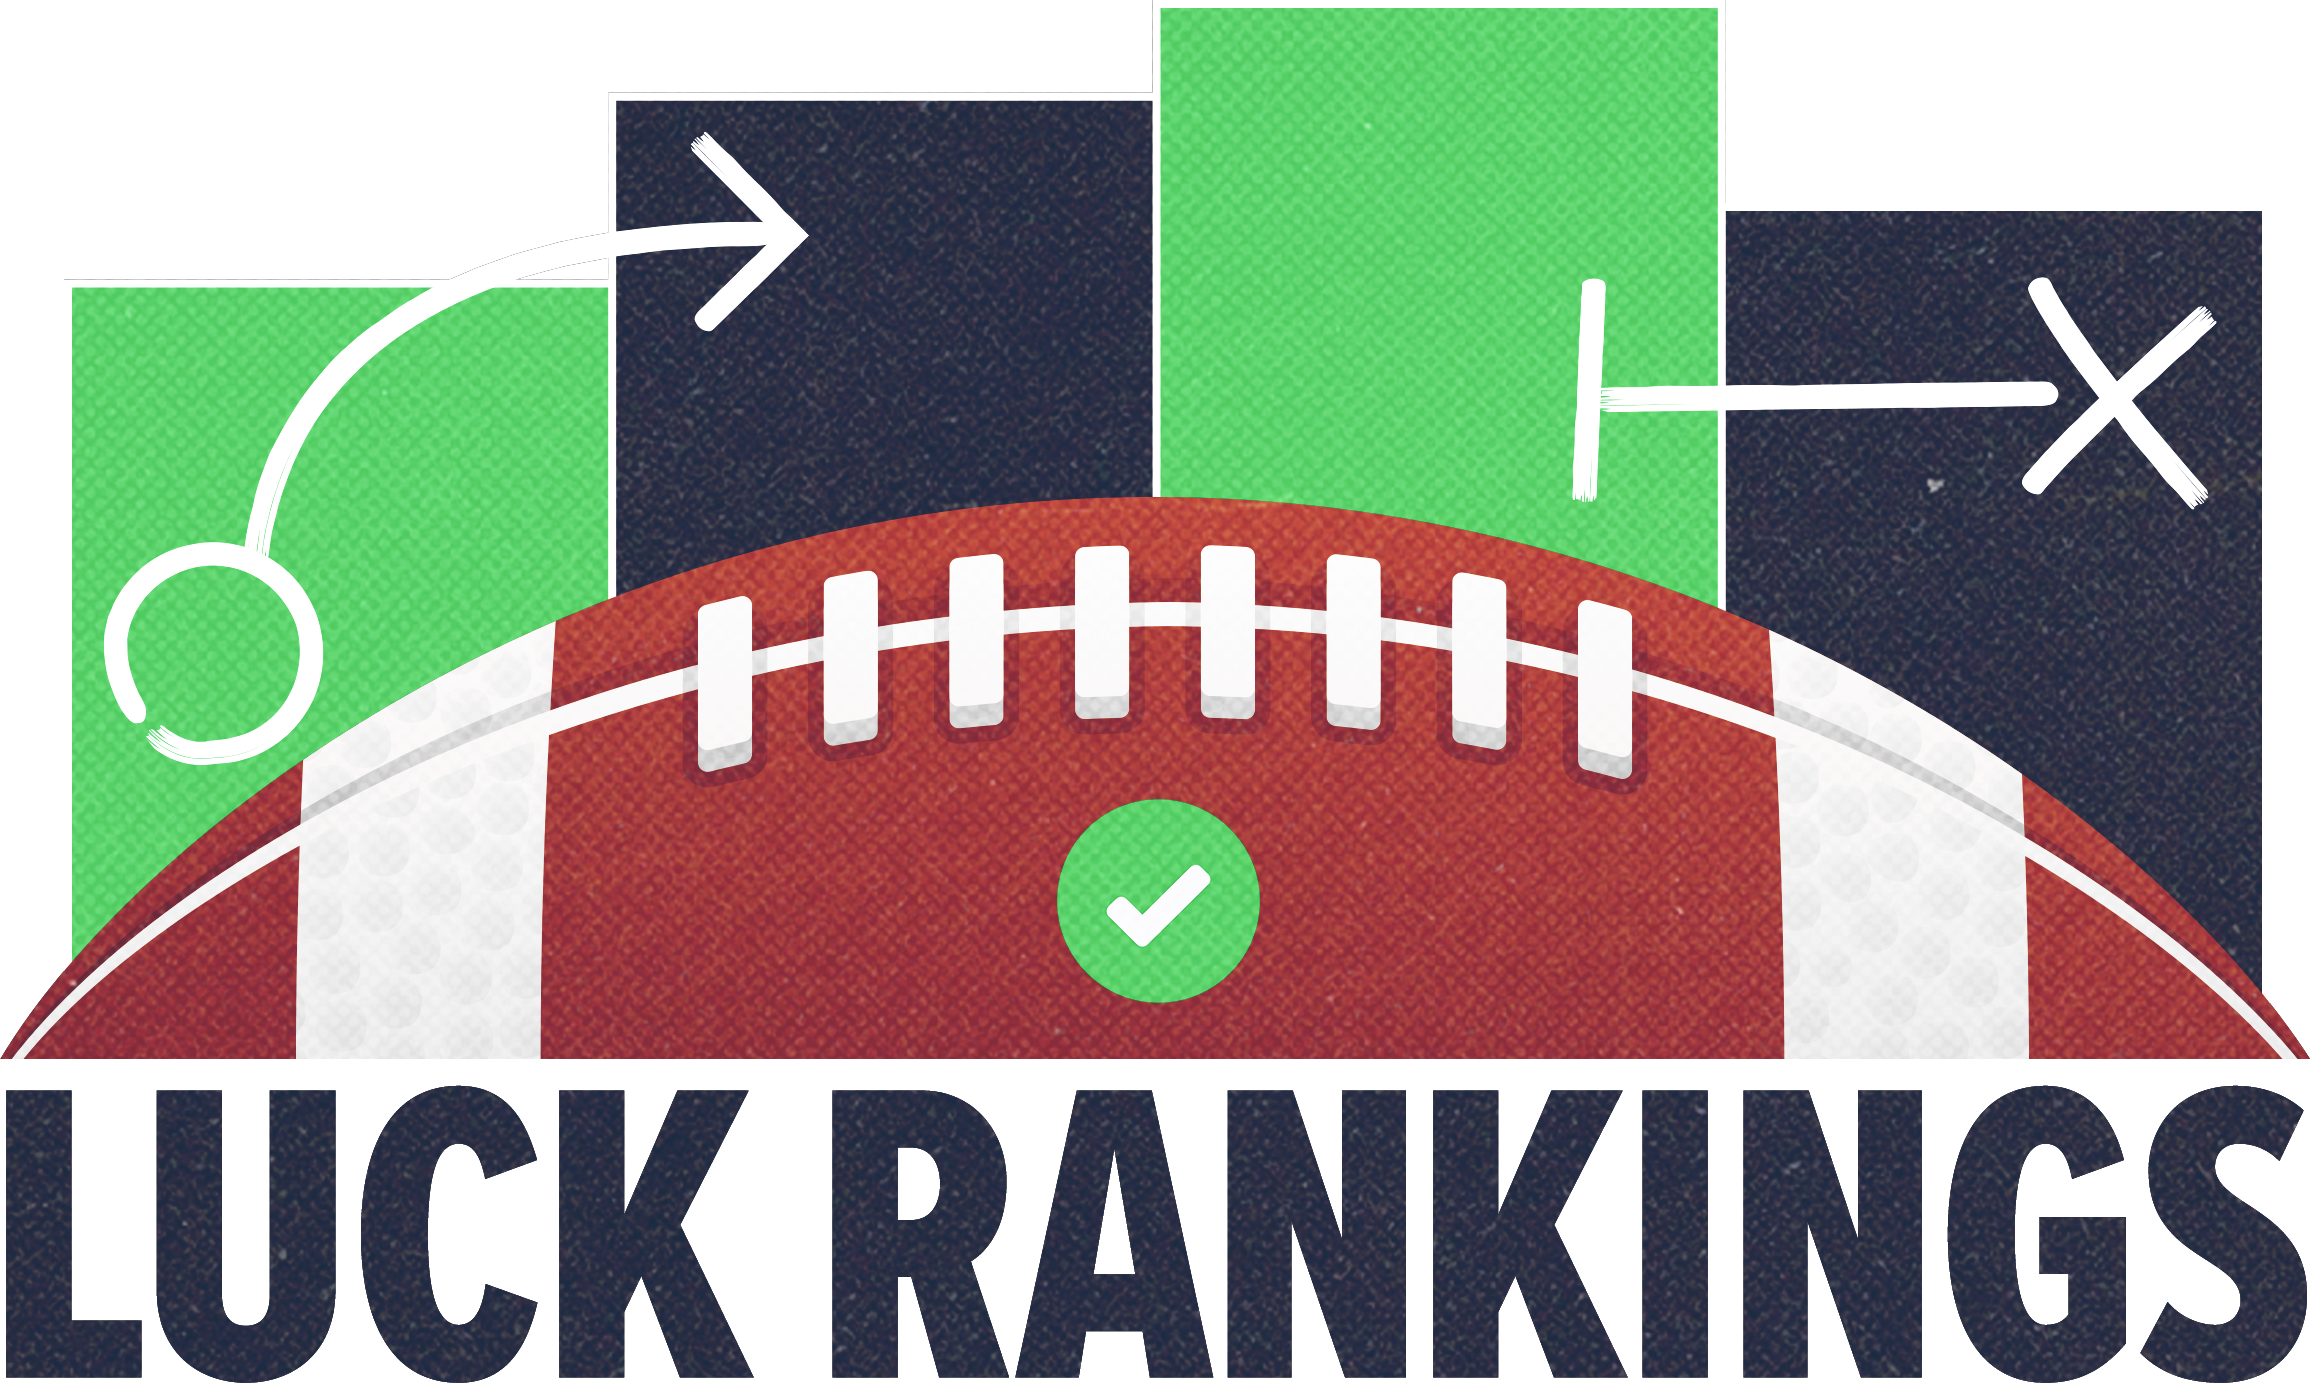 2023 Best Ball: Top 250 DraftKings Fantasy Rankings 3.0